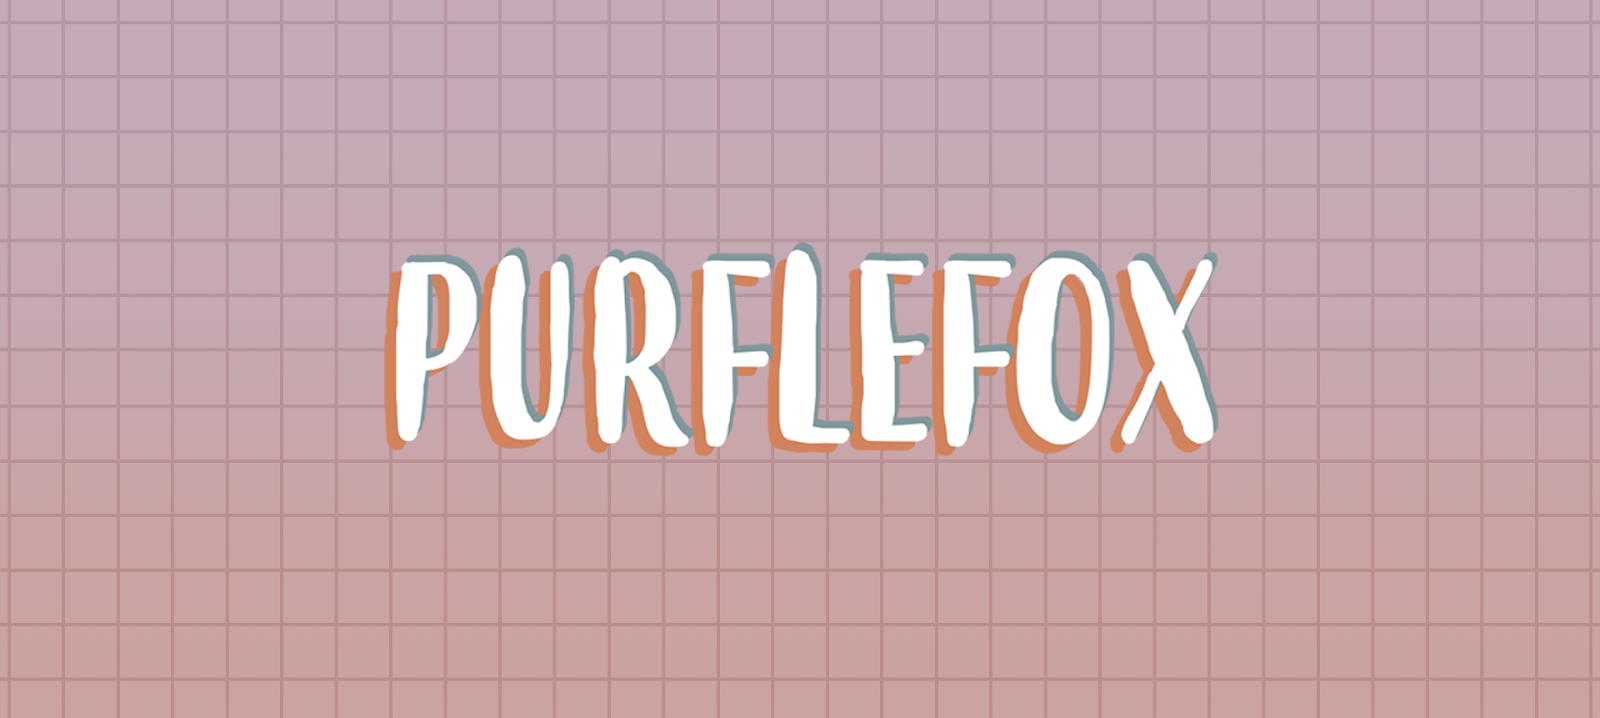 PURFLEFOX